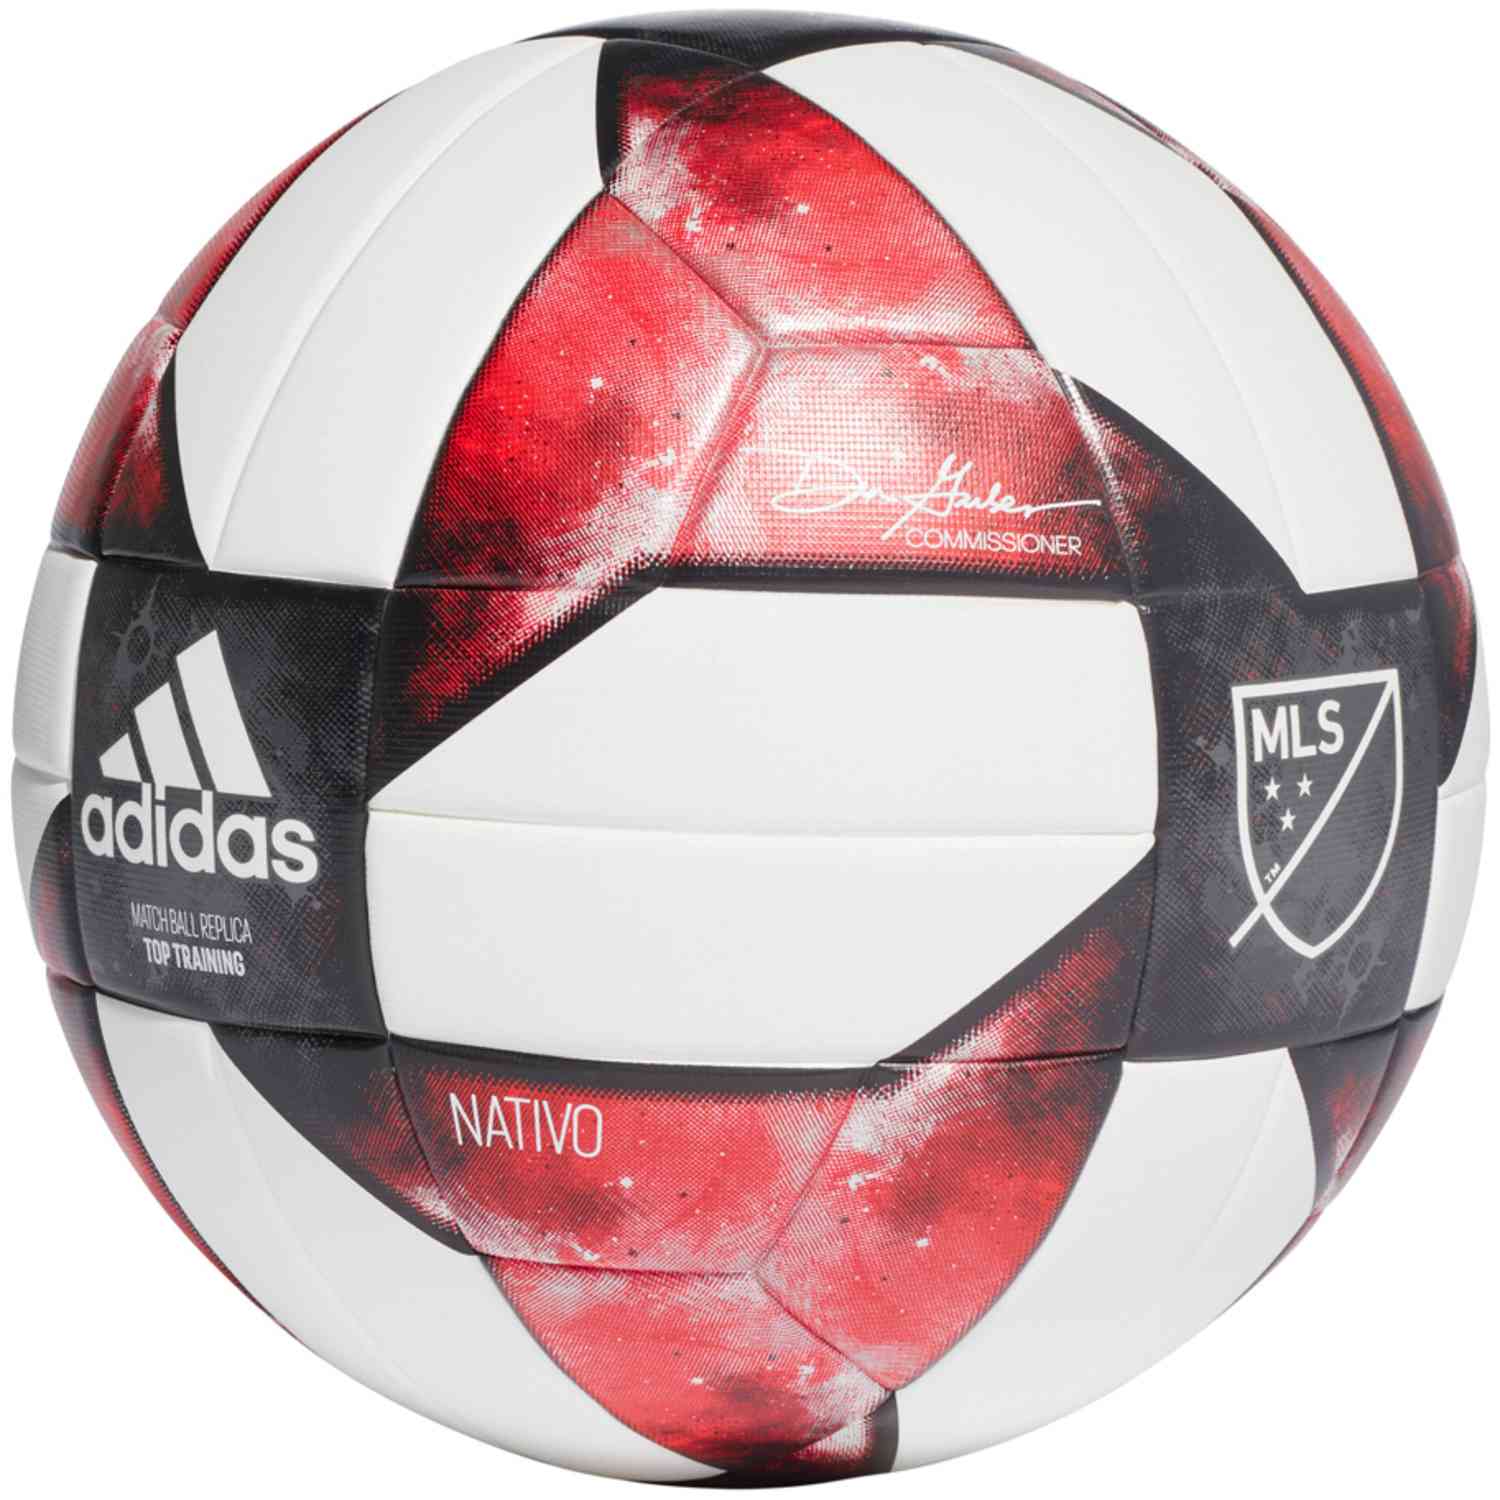 nativo soccer ball